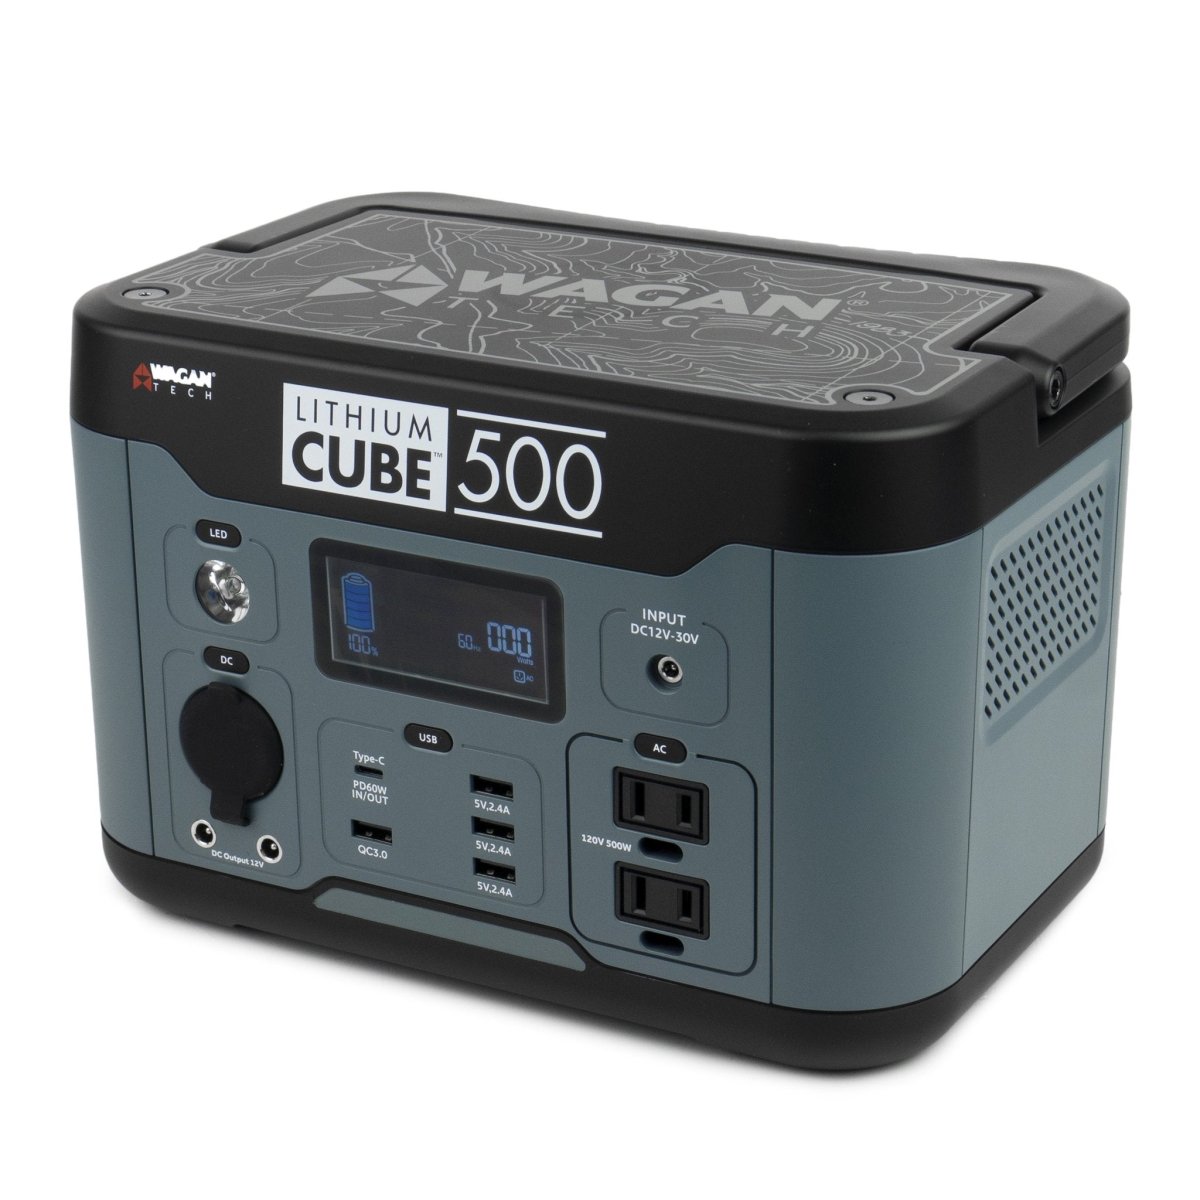 Lithium Cube 500 - Overland Bound